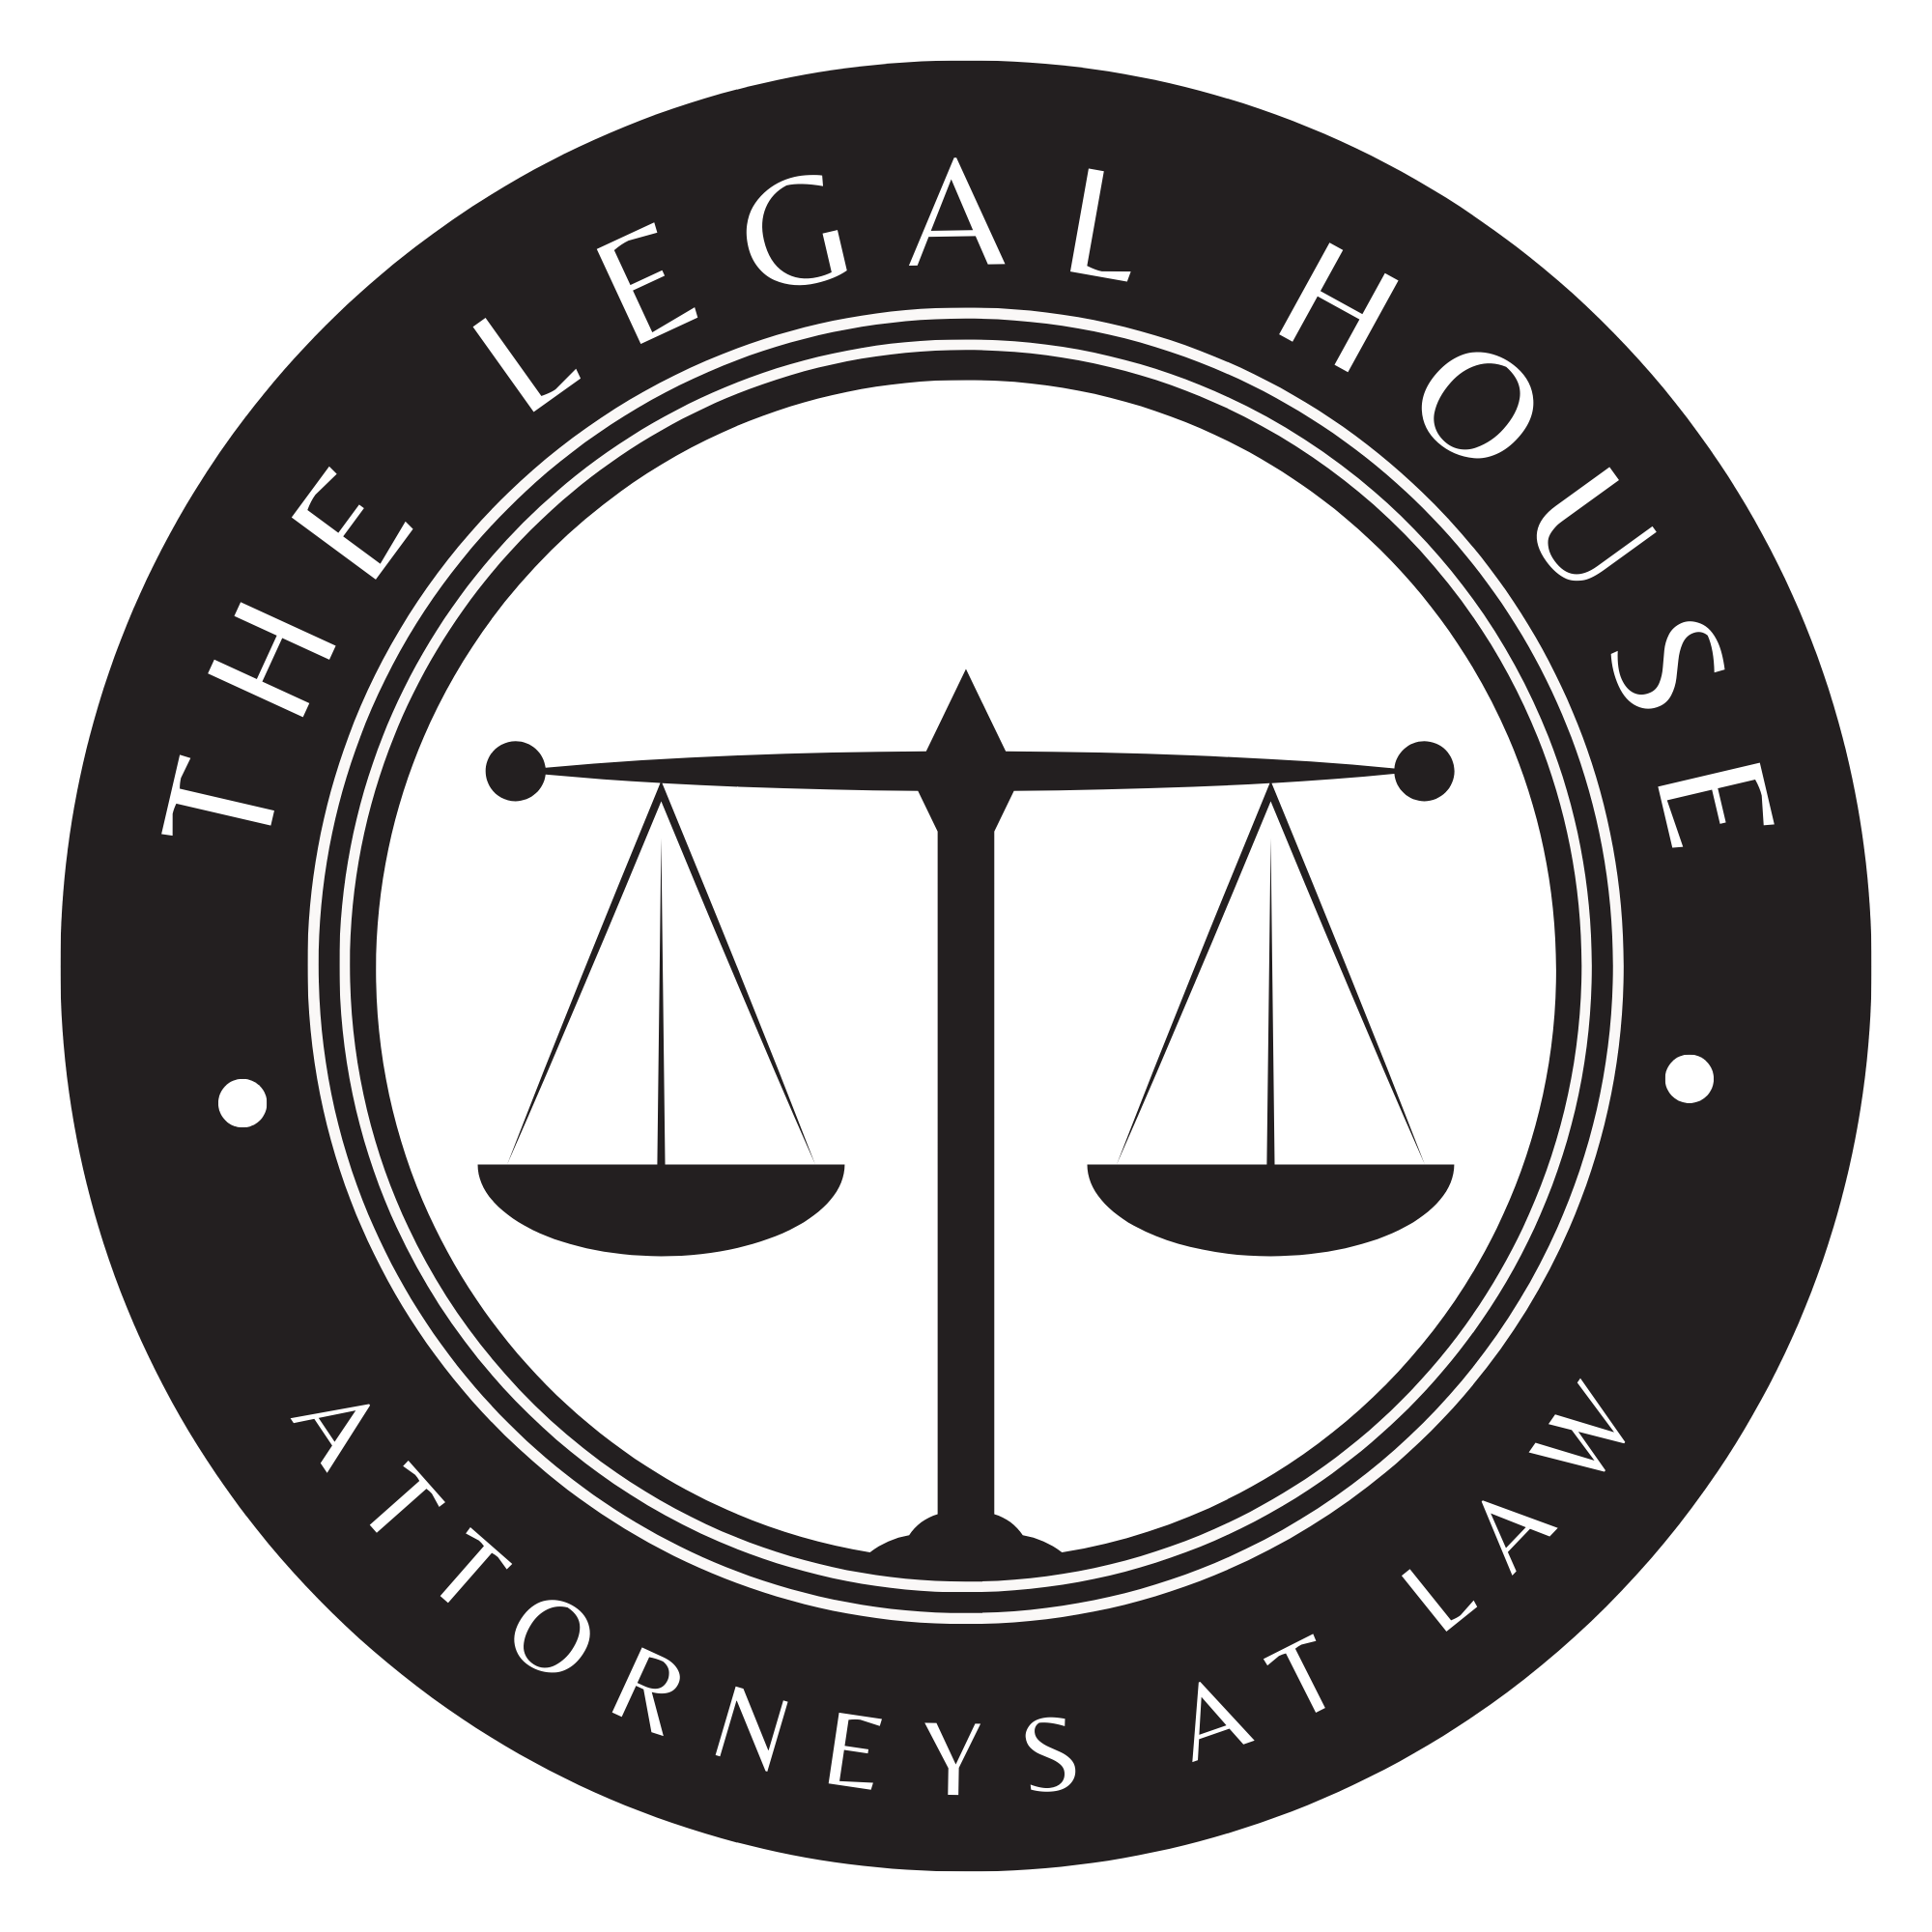 The Legal House Thailand